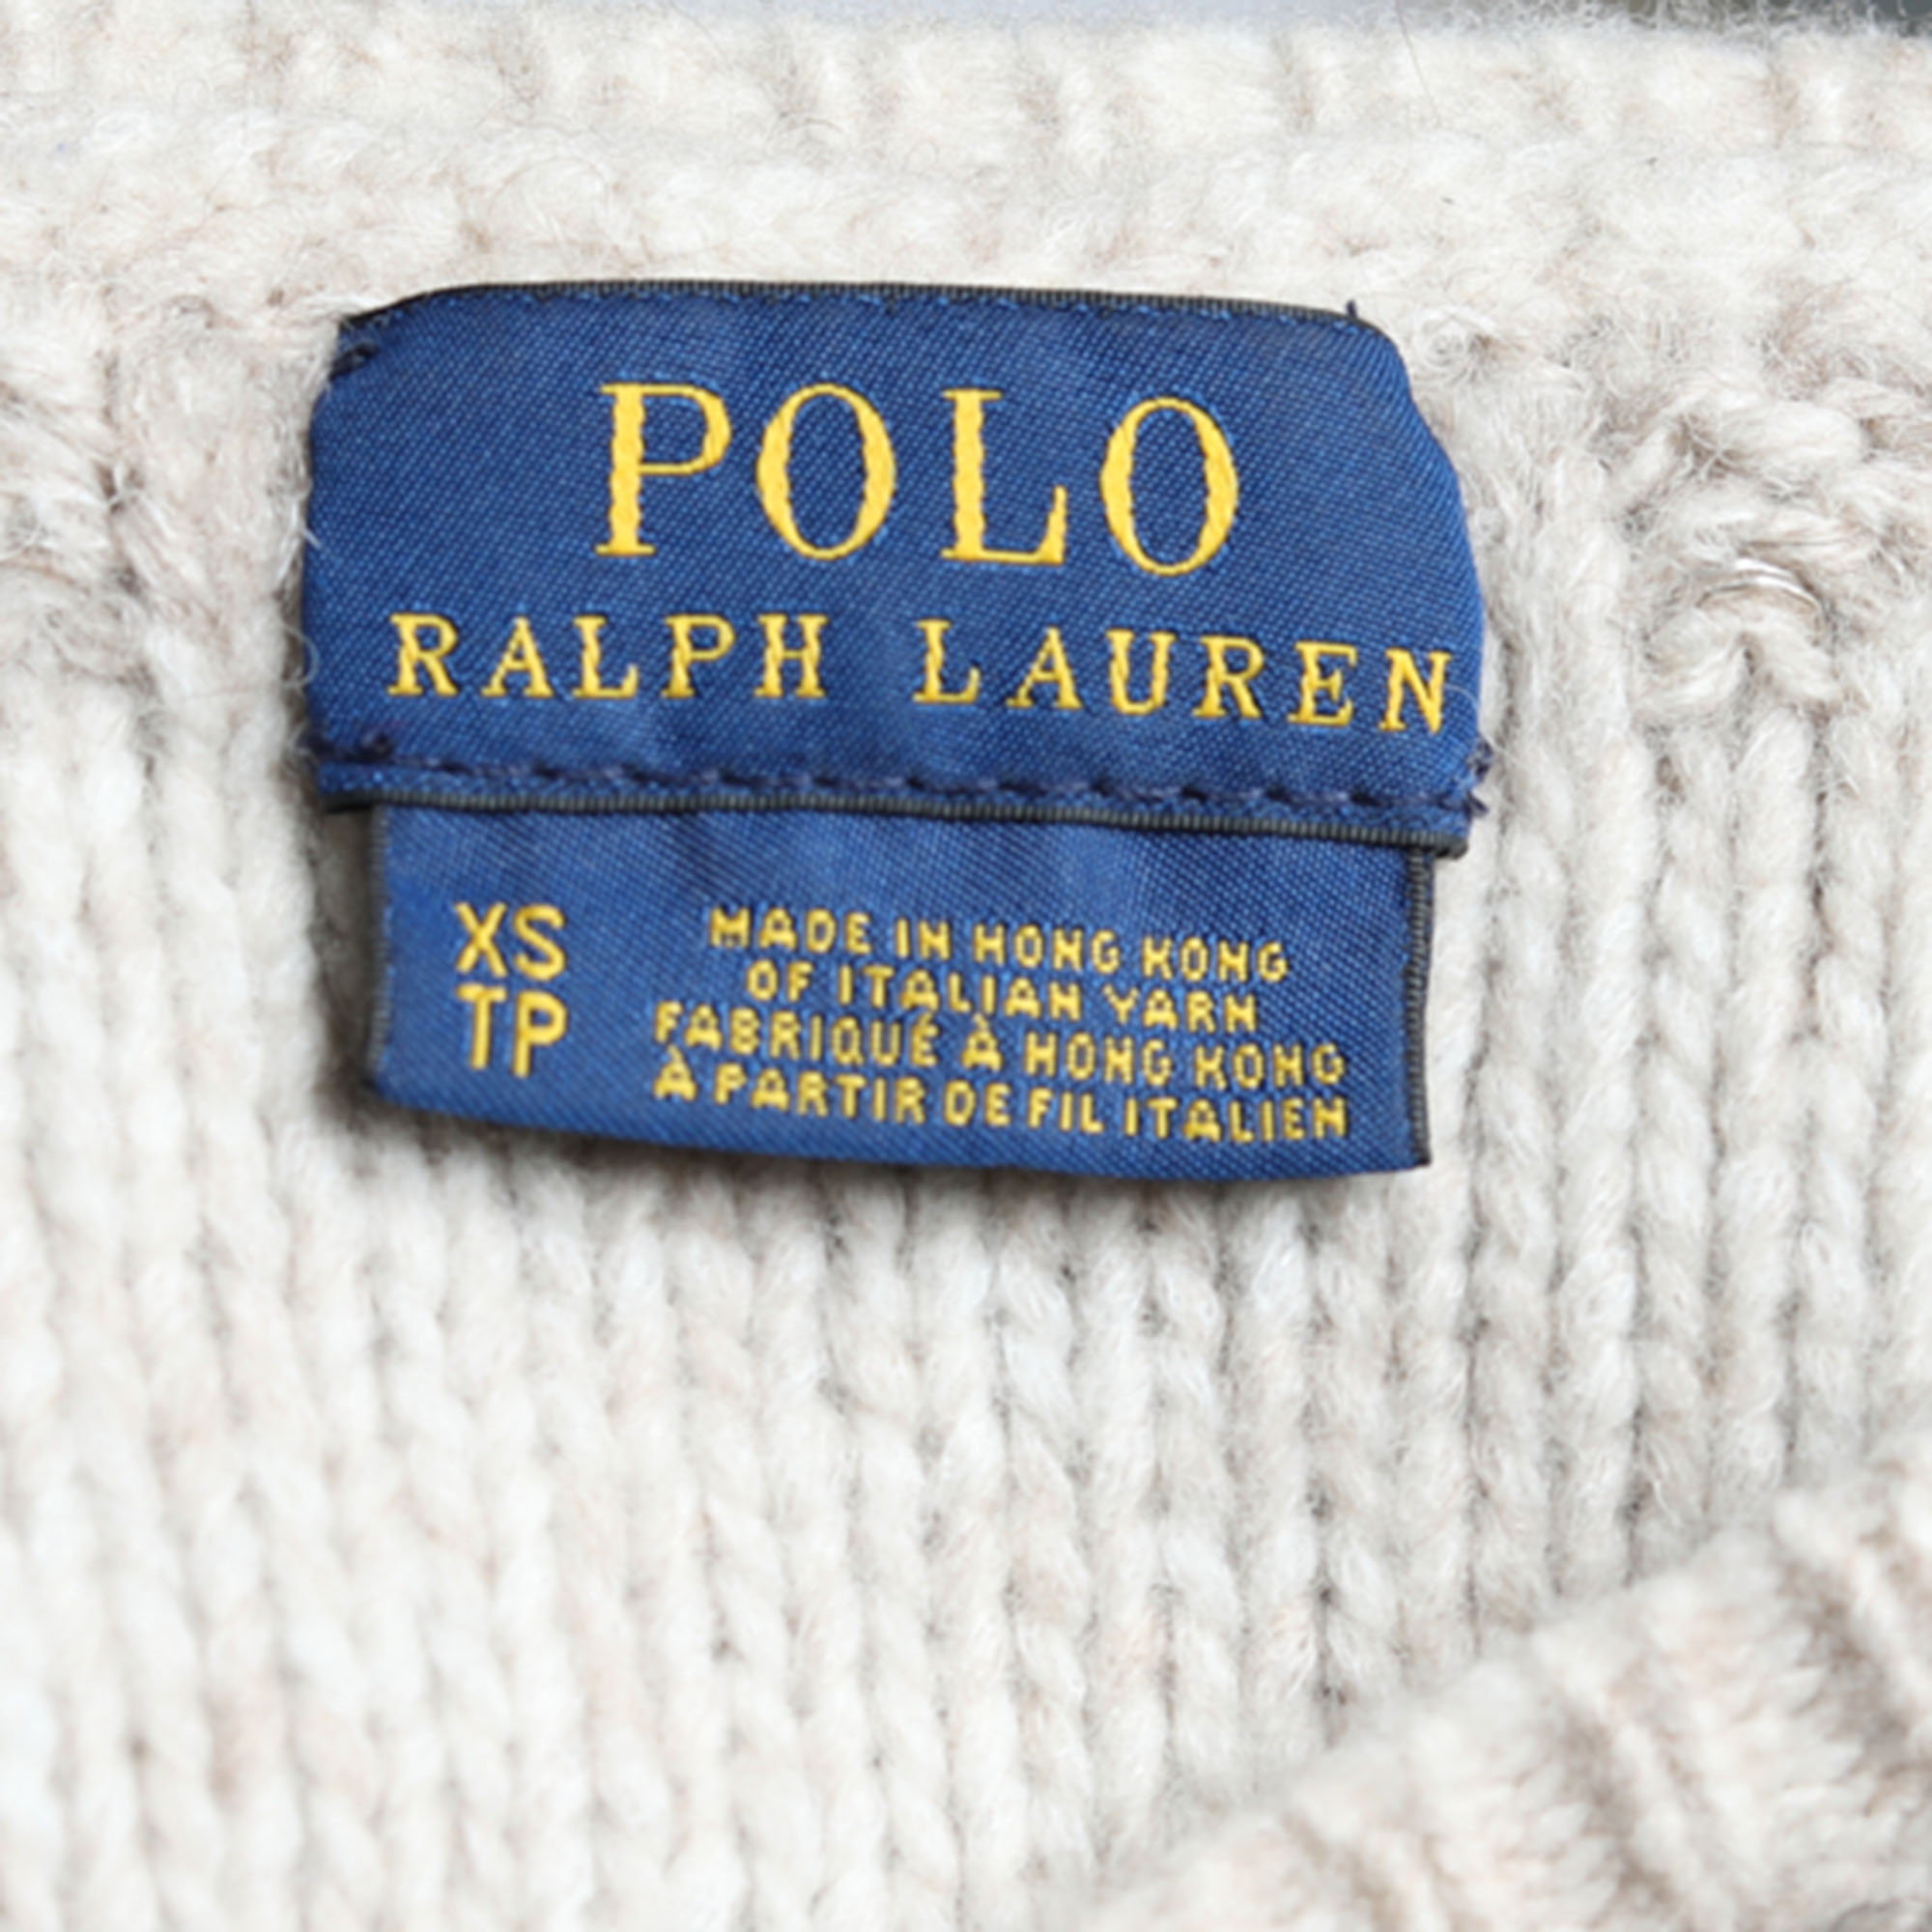 Polo Ralph Lauren Beige Lurex Knit Wool Blend Sweater XS